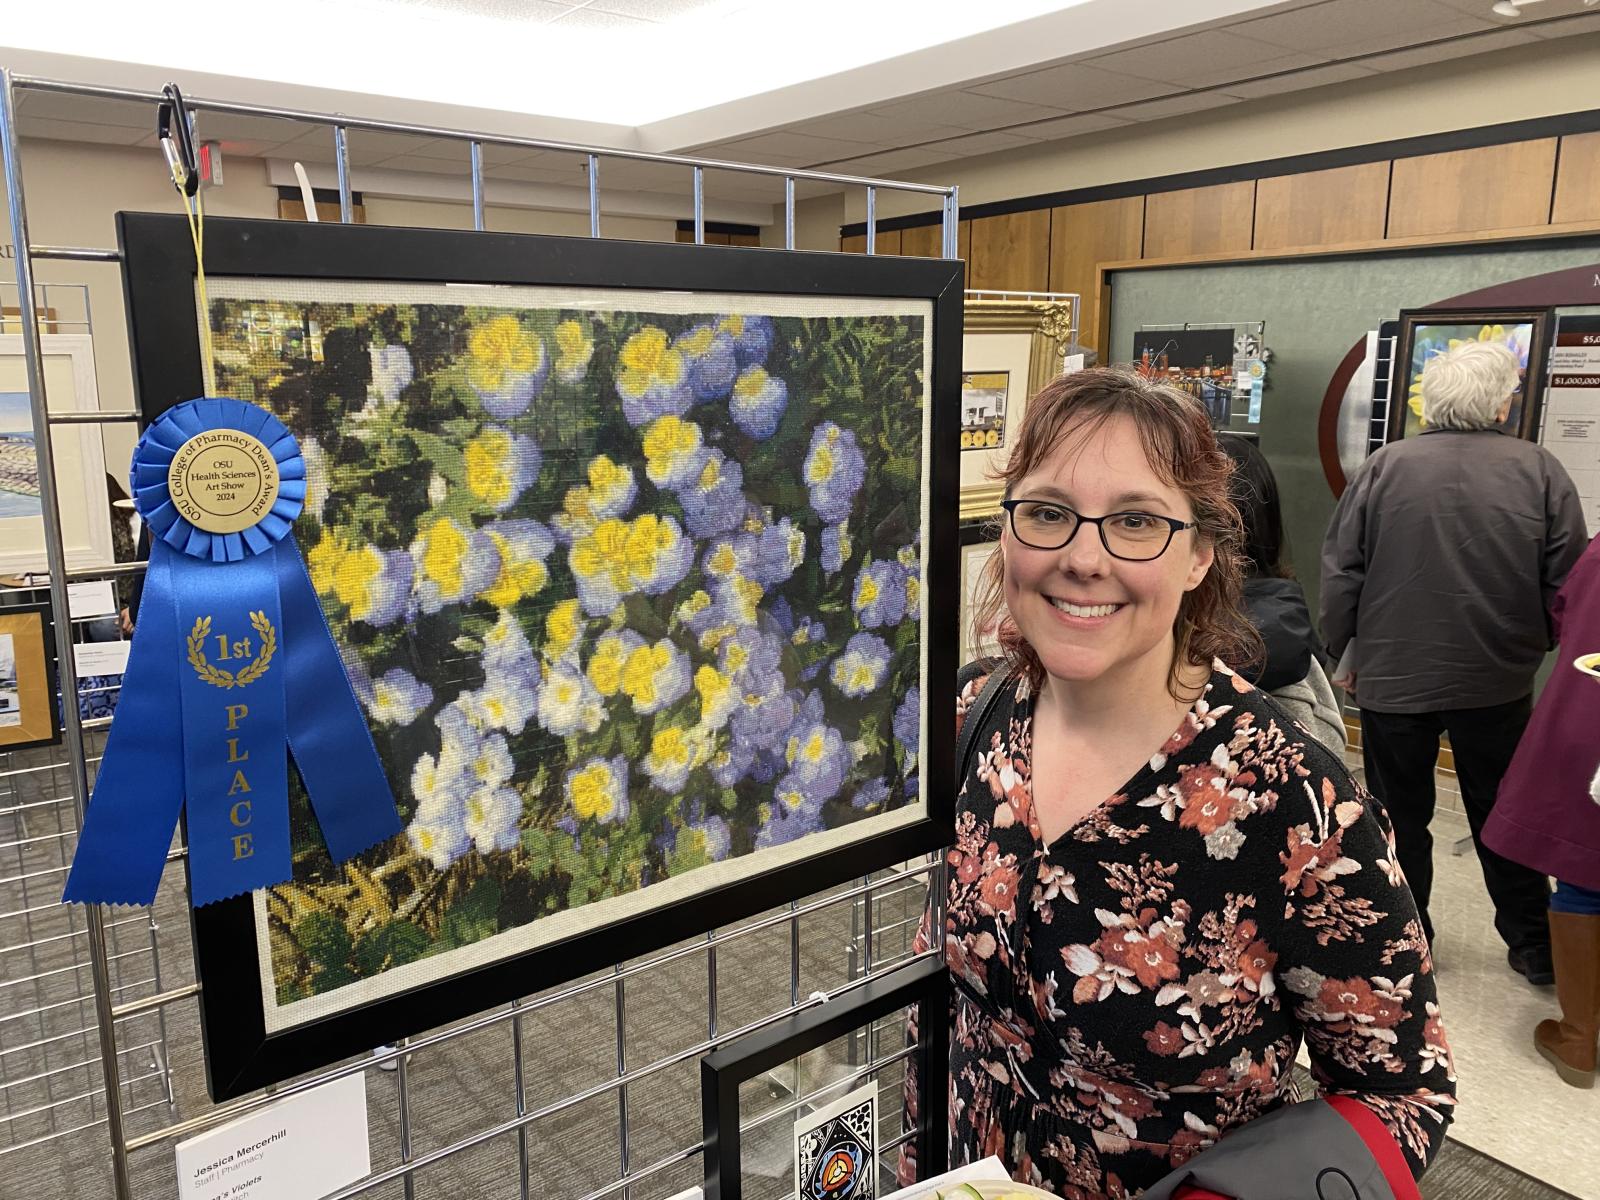 jessica mercerhill posing beside her artwork with 1st place ribbon